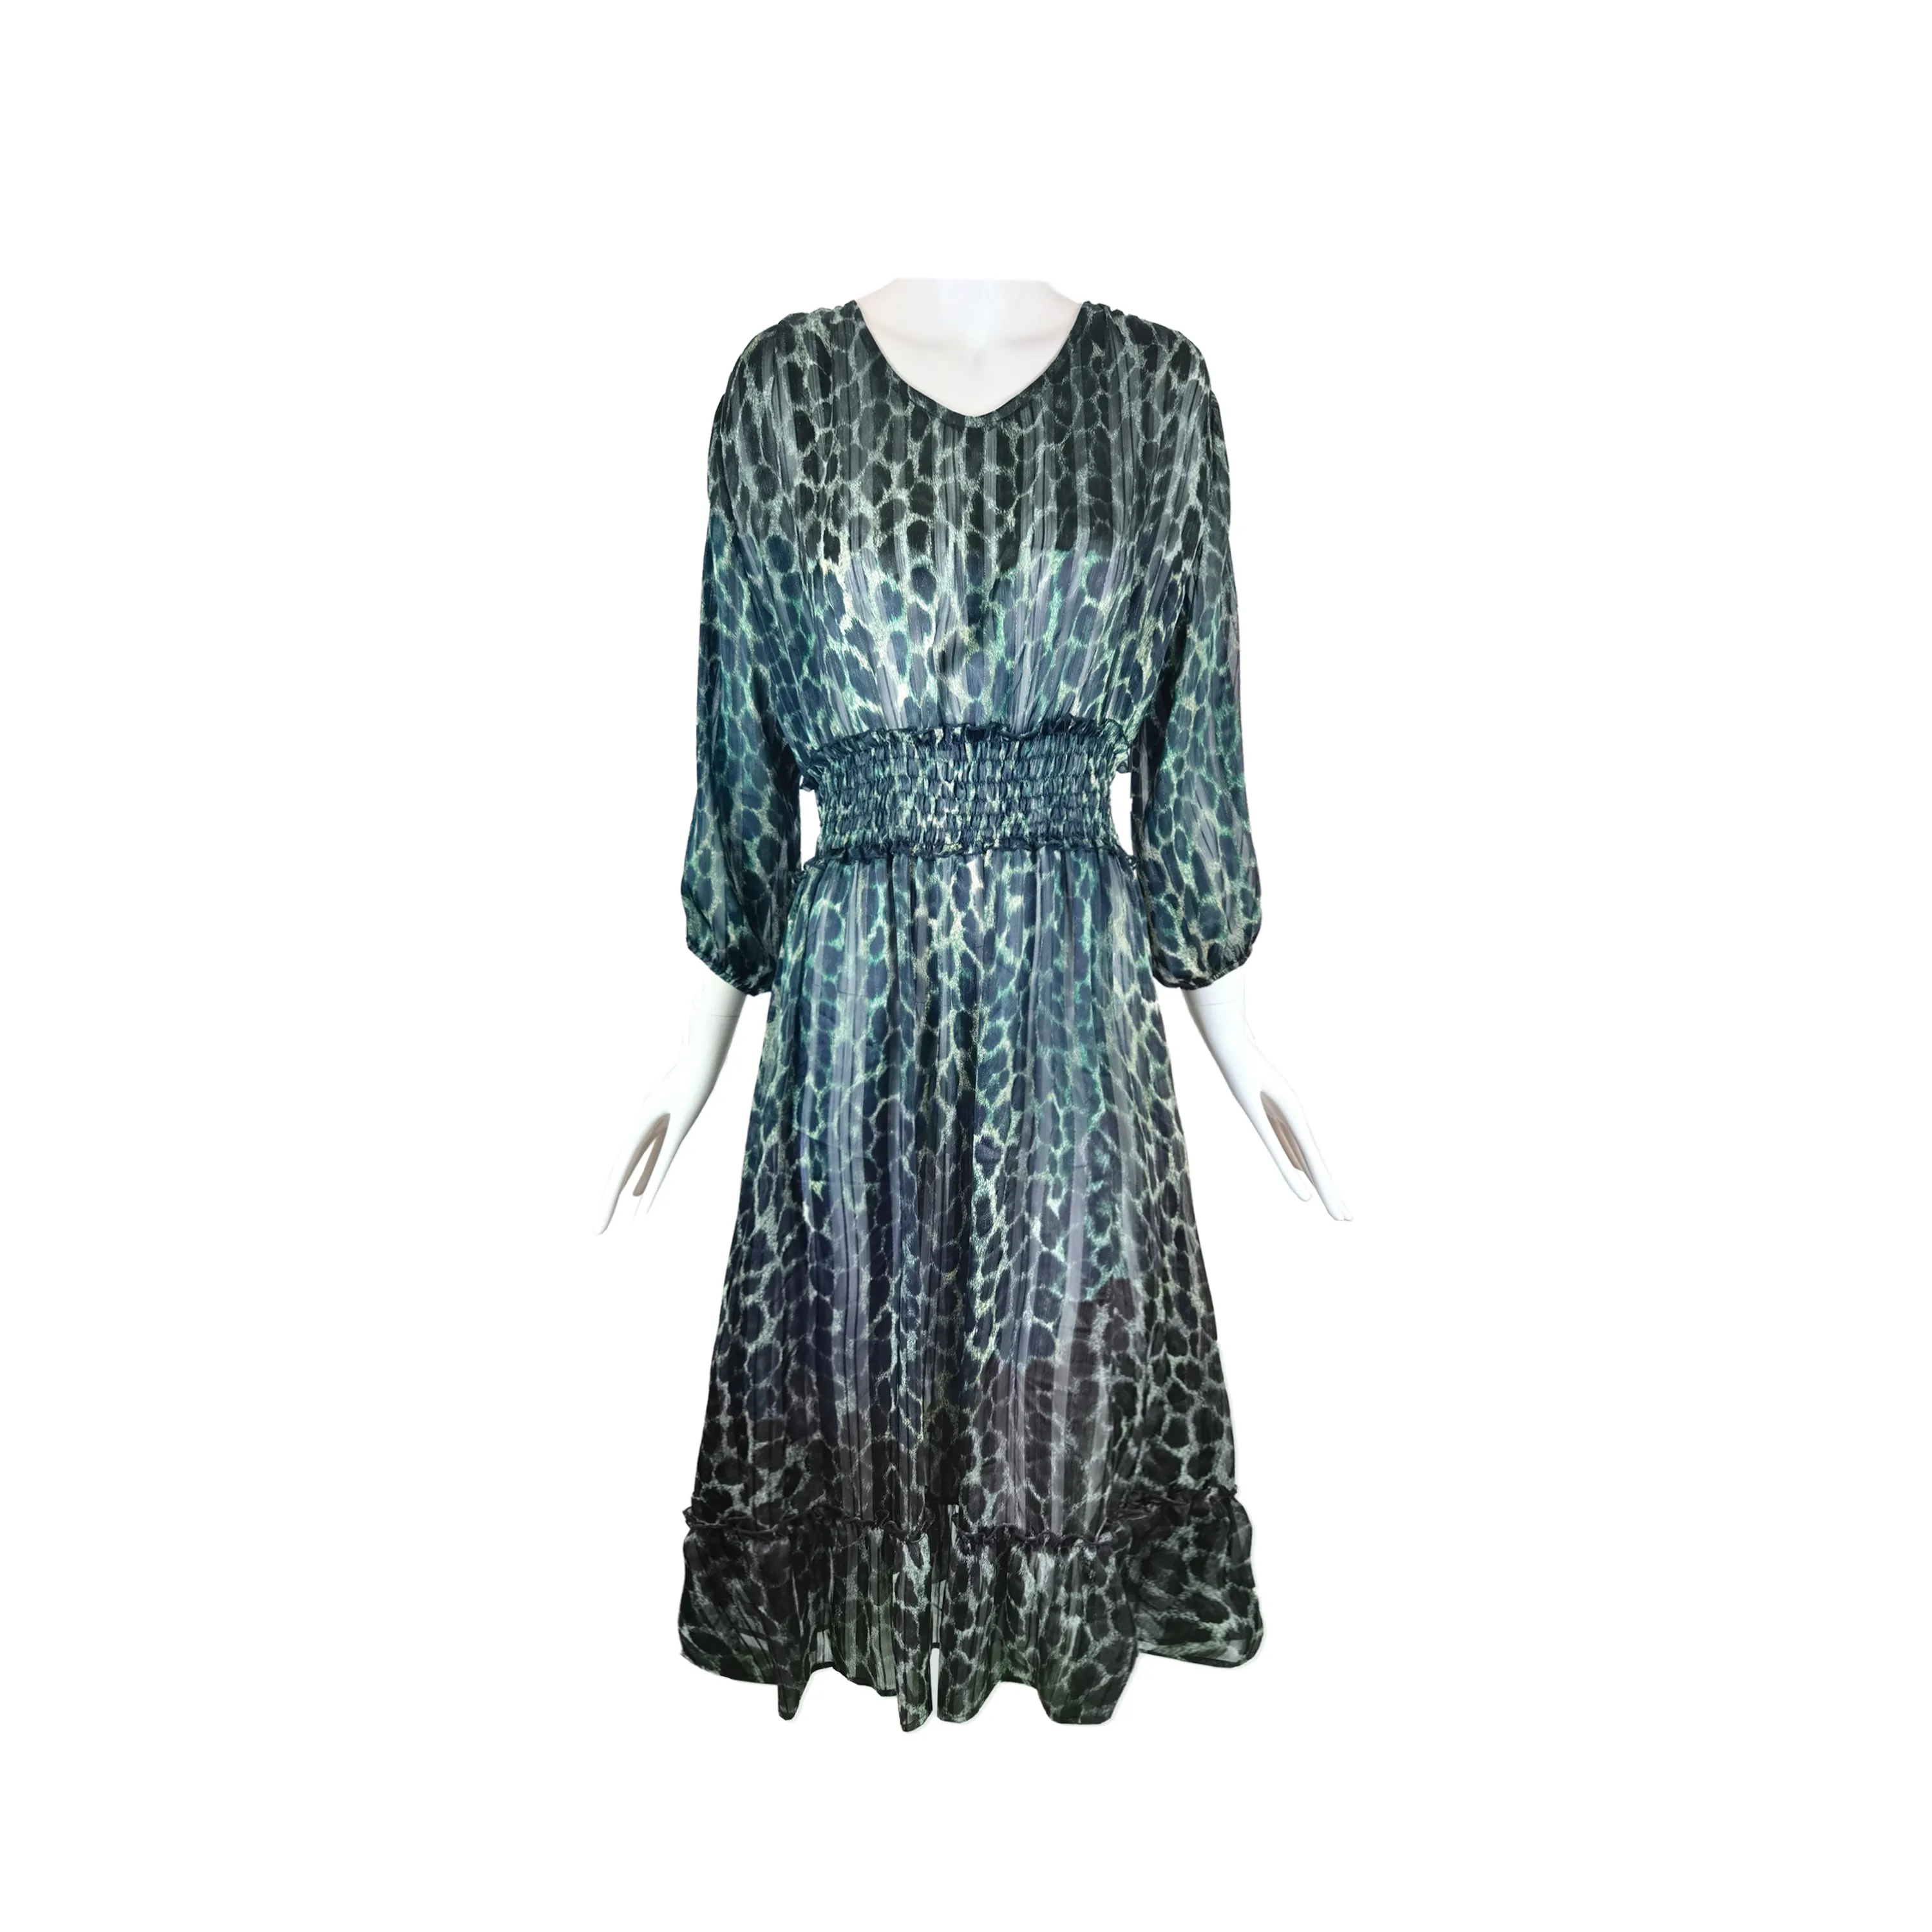 Lady Summer Elegant Modern Casual Leopard Dress 2022 Latest Wholesale Plus Size Women Loose Garment DYED Vintage Chiffon Woven